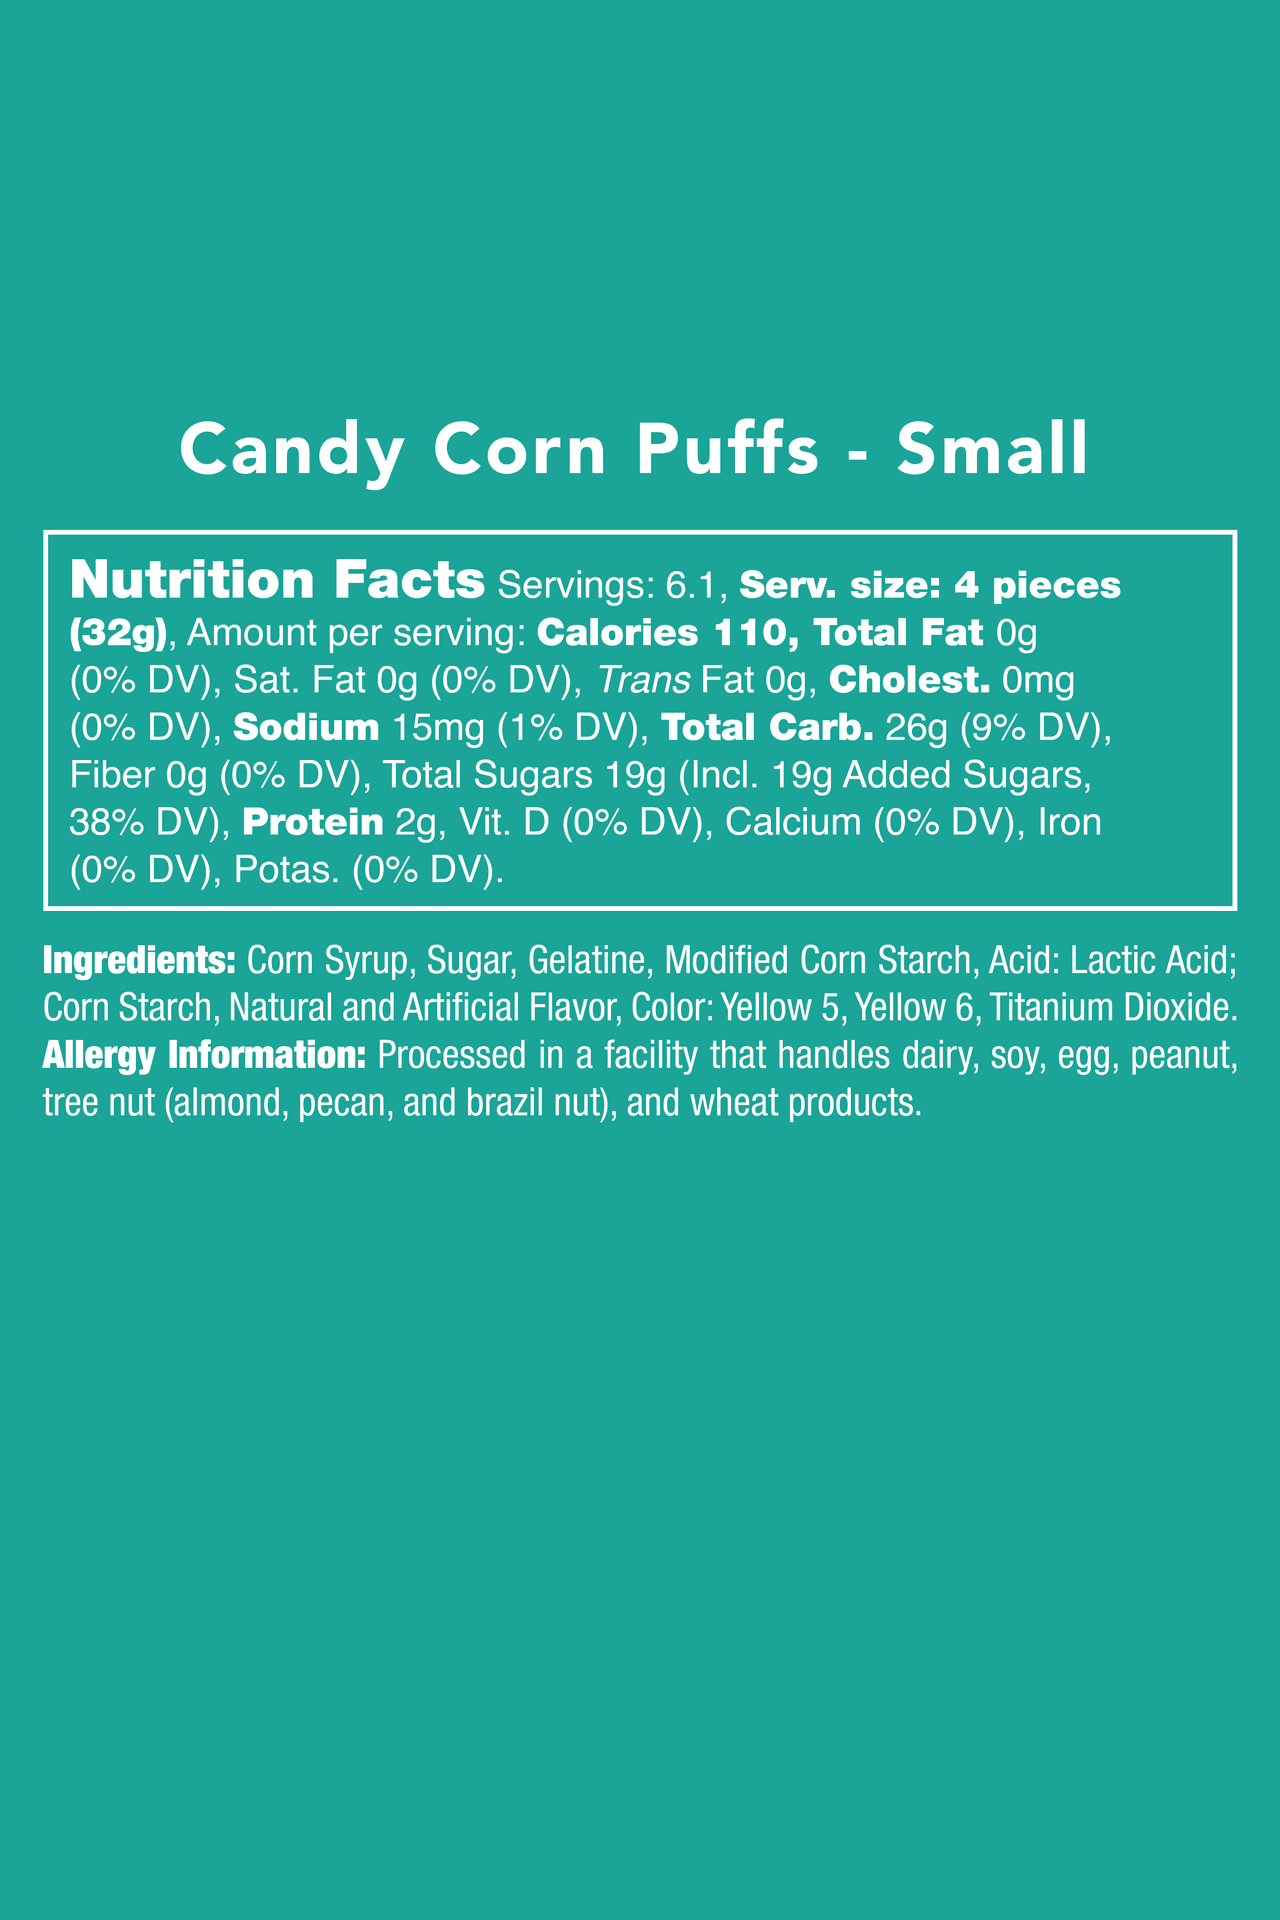 Candy Corn Puffs Candy Club * Pre-Order *